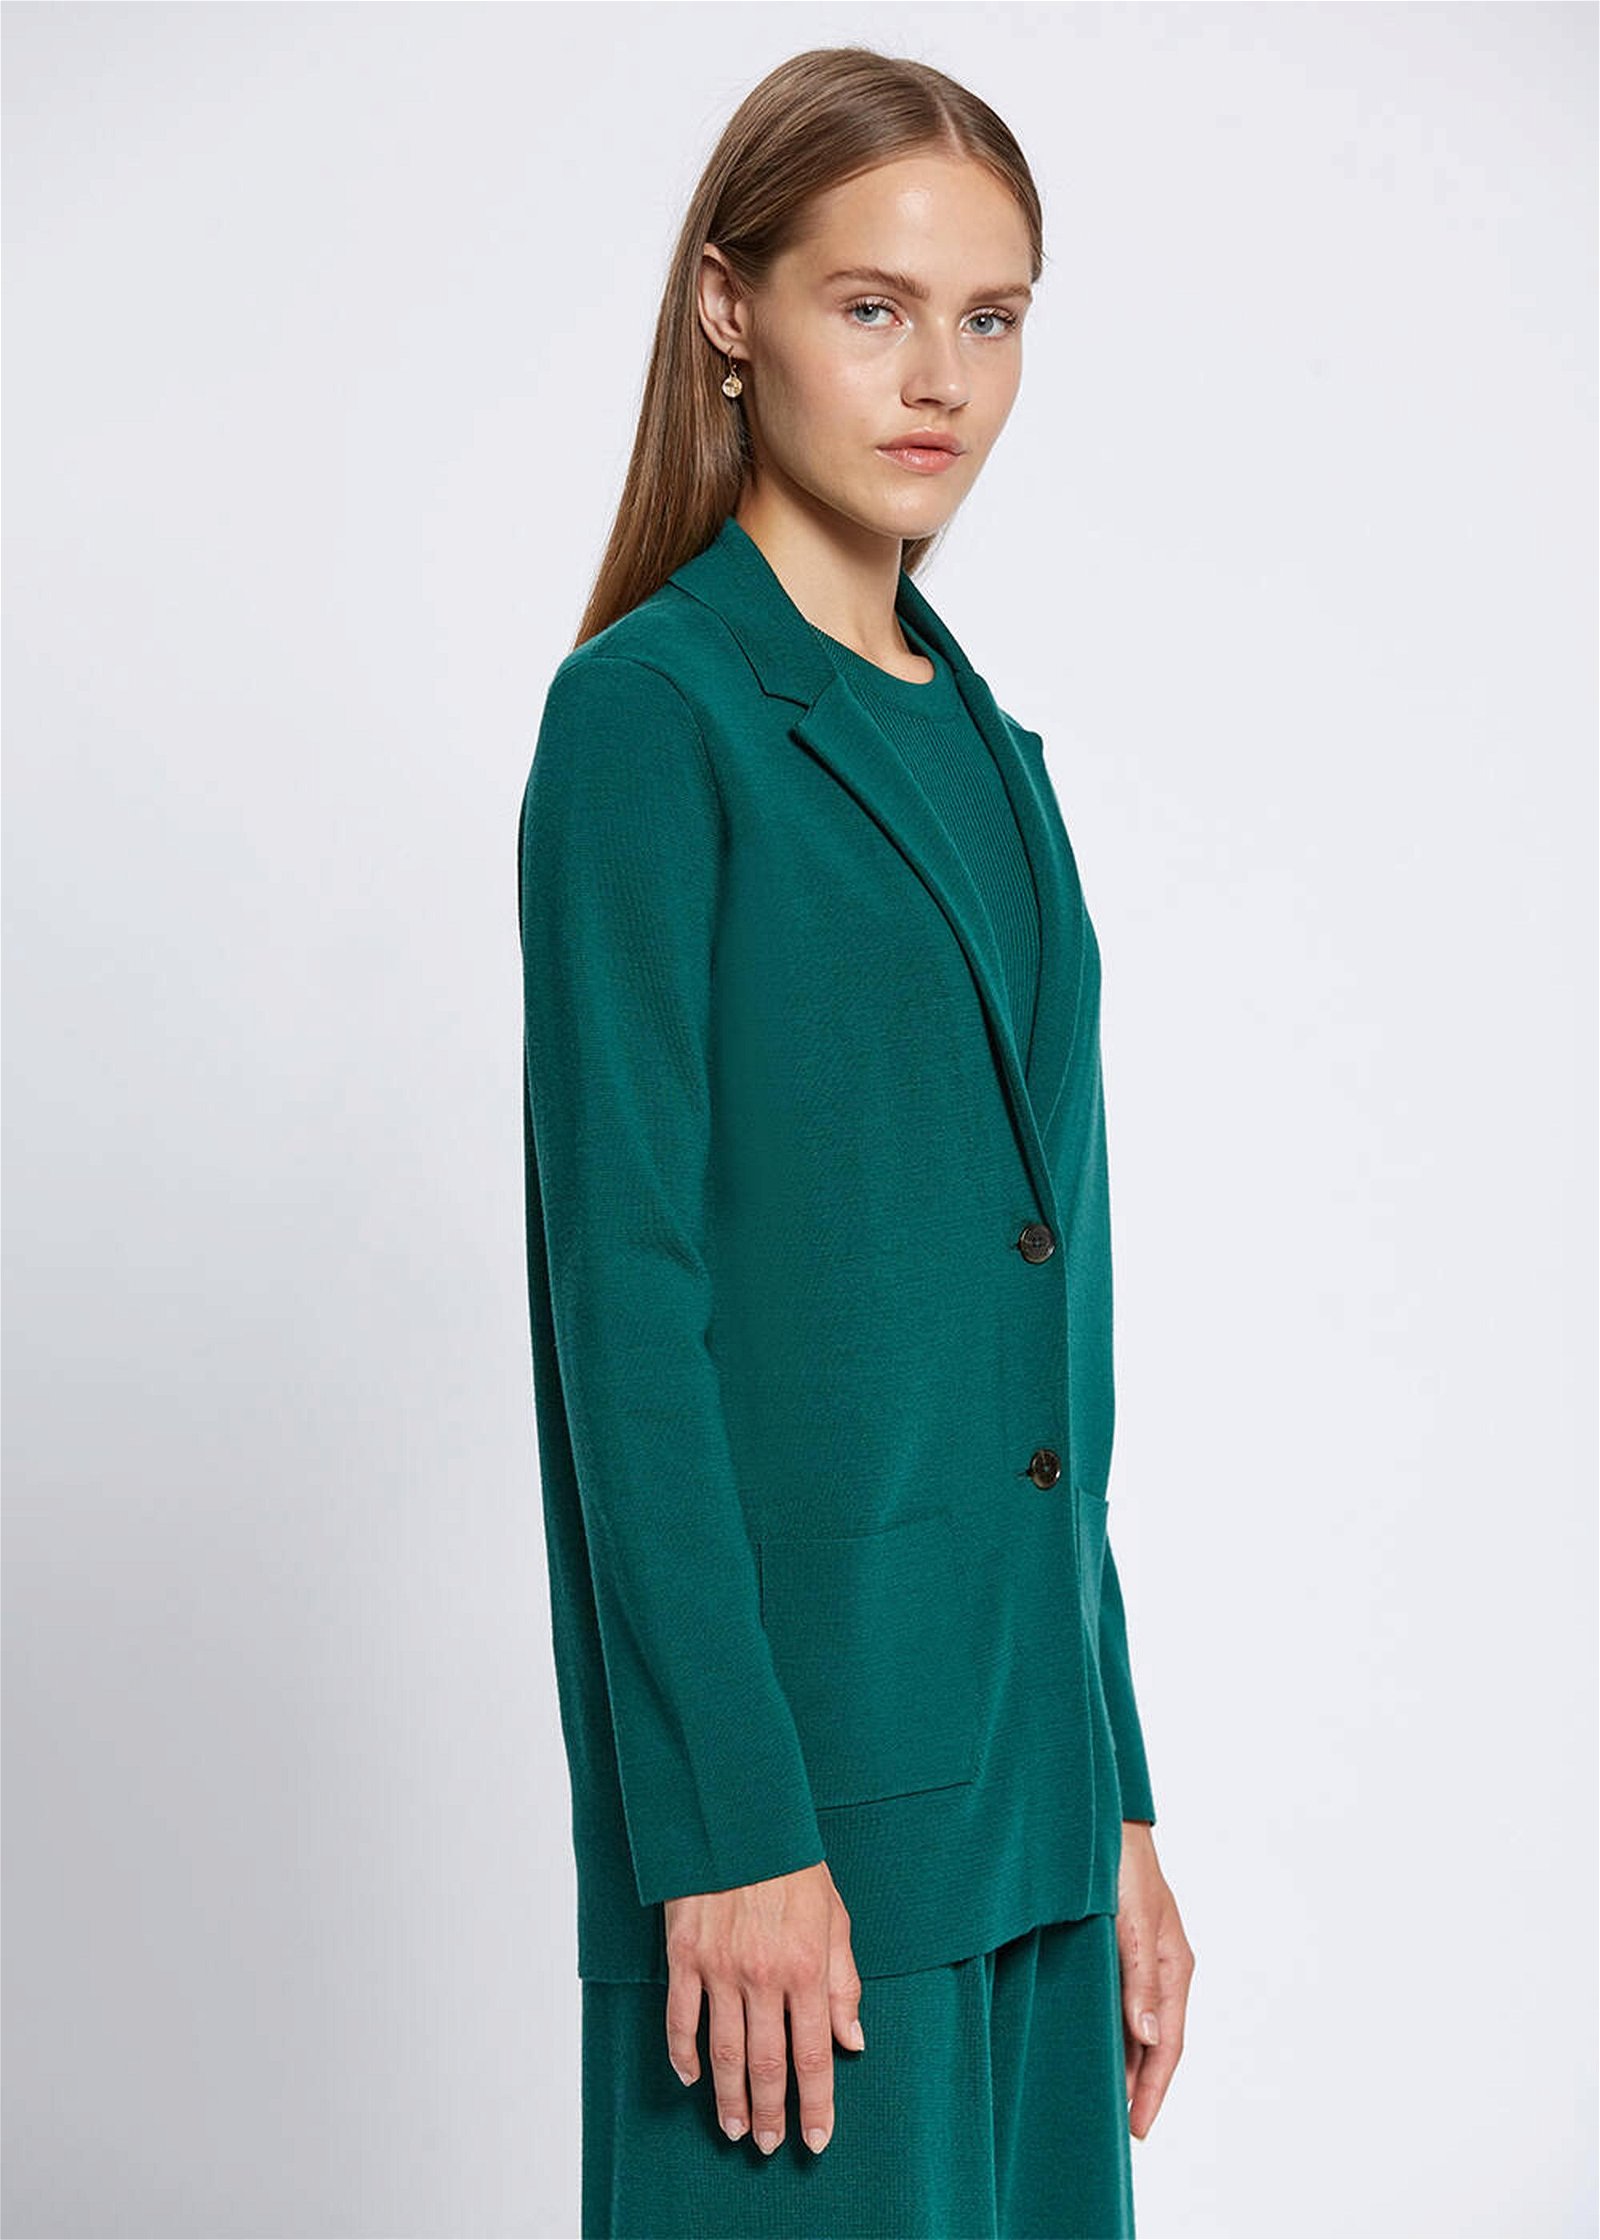 Knitss Extrafıne Merino Yün Yeşil Triko Blazer Ceket